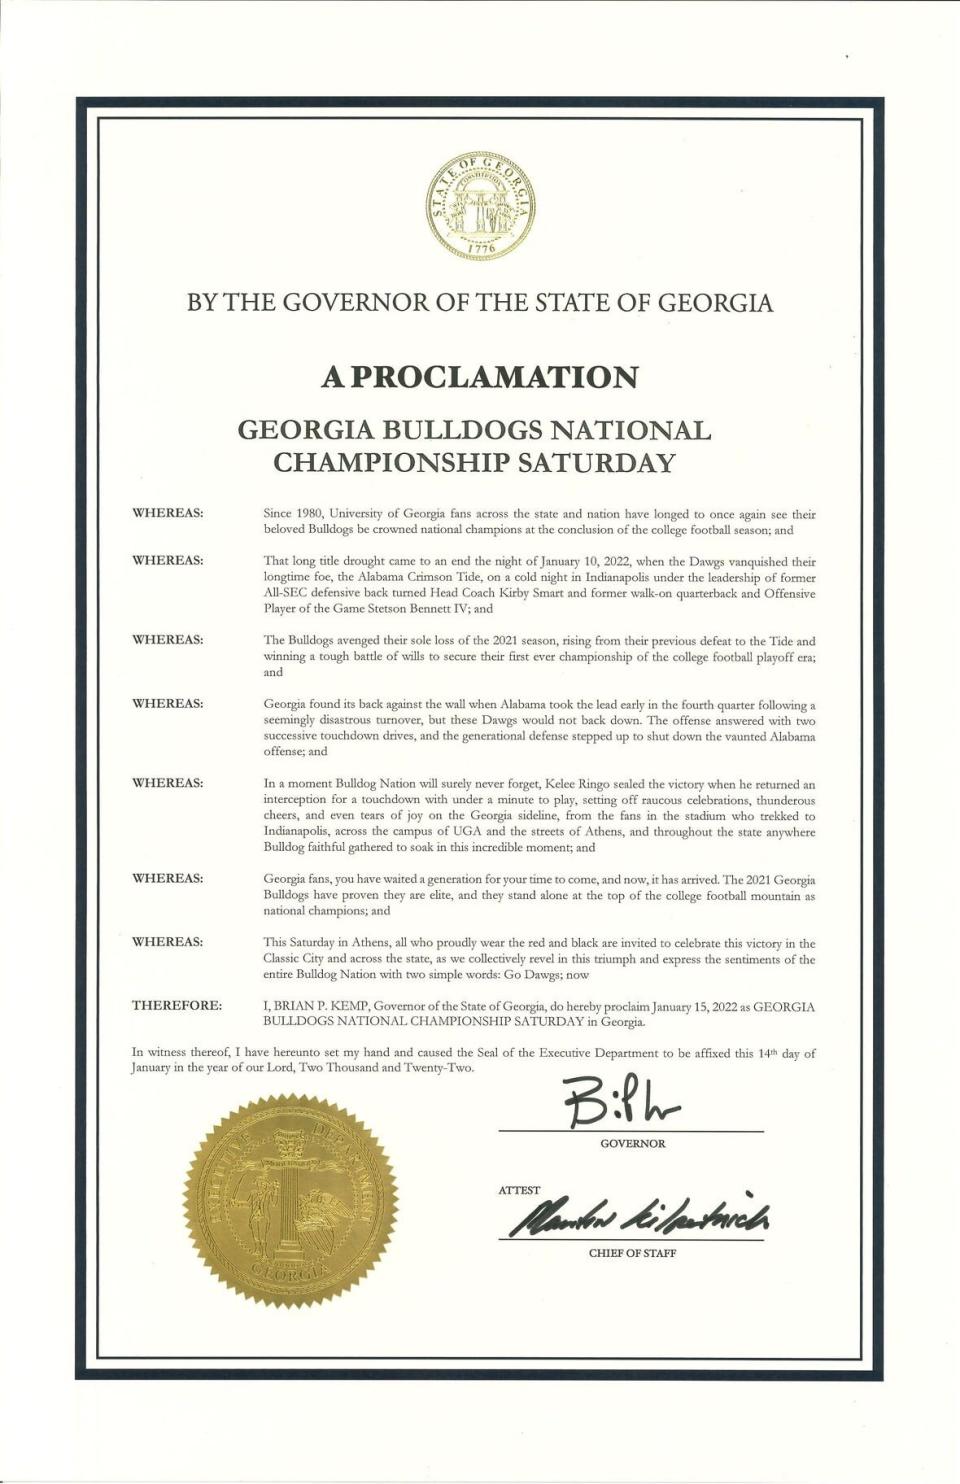 Gov. Brian Kemp declared Jan. 15, 2022, as 'Georgia Bulldogs National Championship Saturday.'